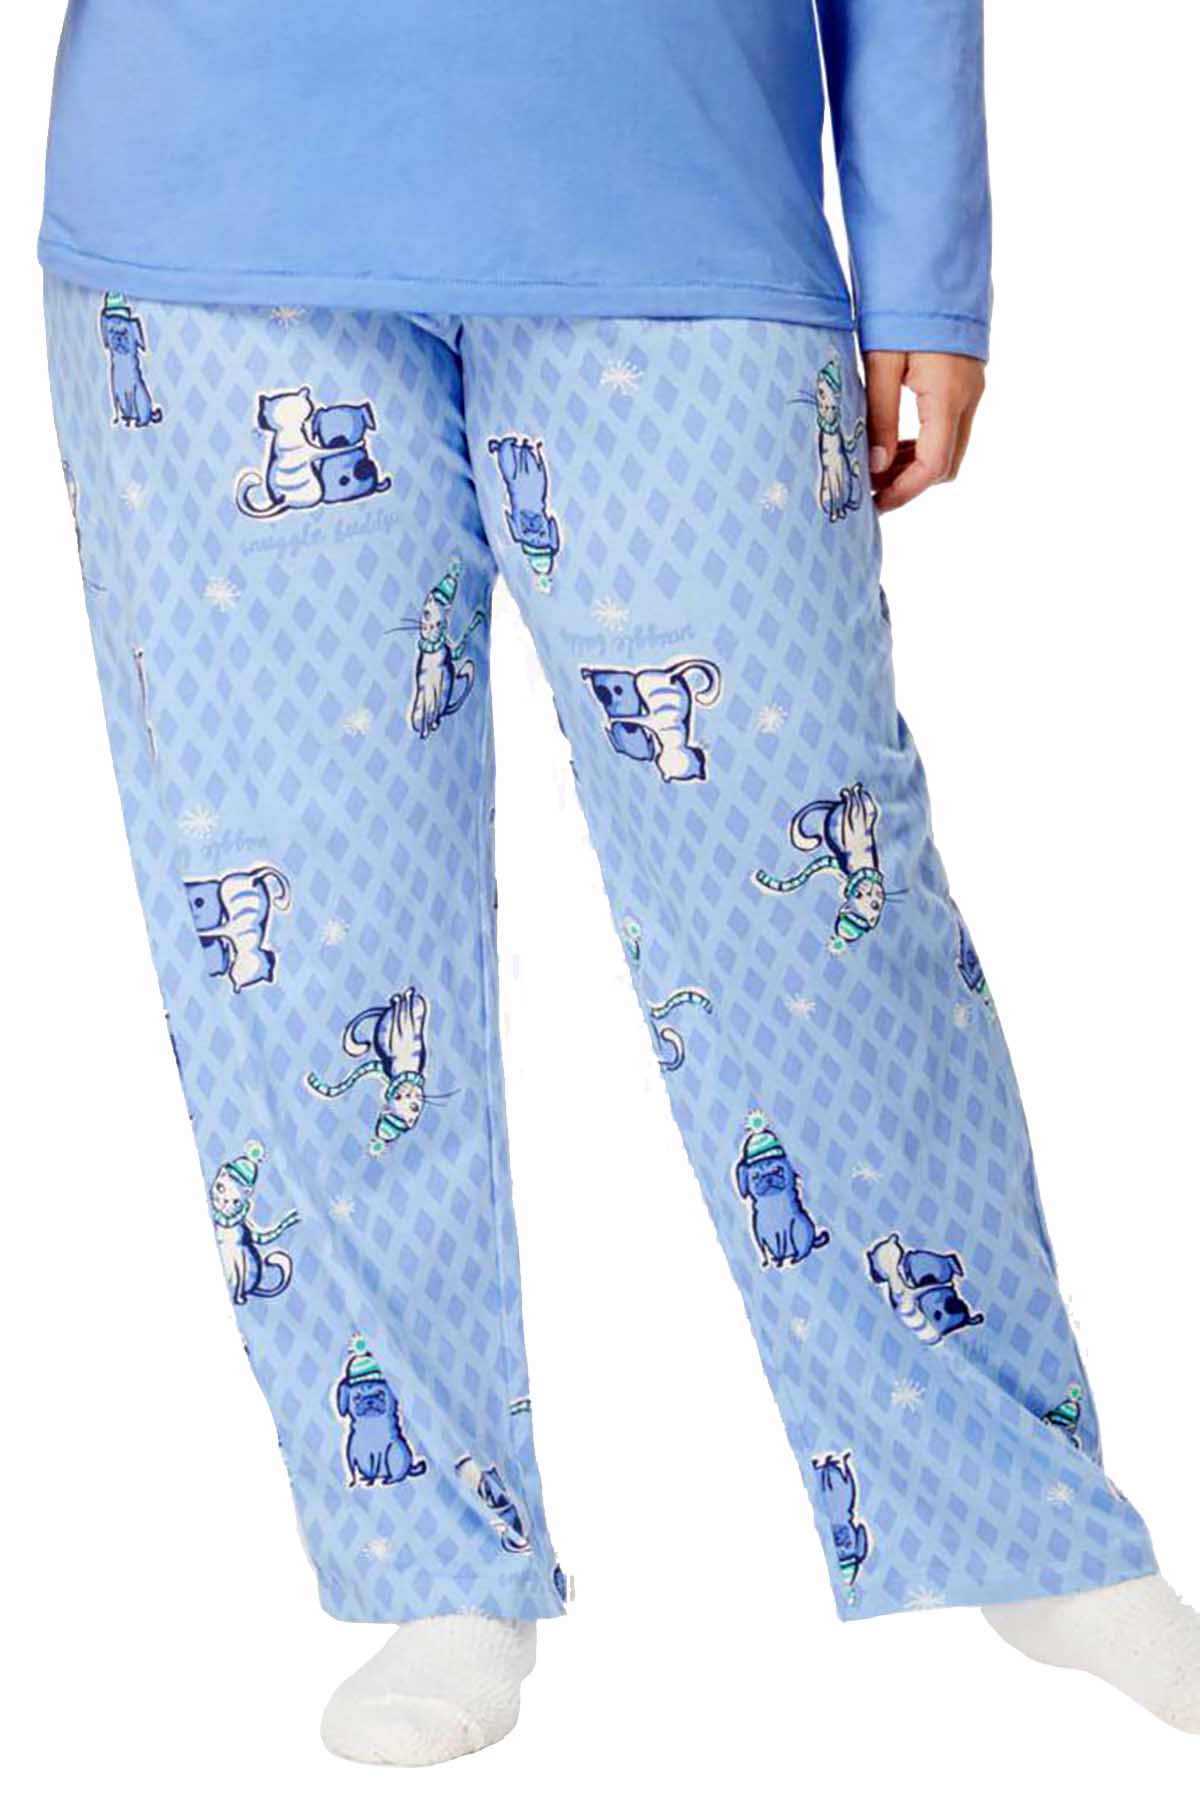 HUE PLUS Wedgewood-Blue Snuggle-Buddy Pajama Pant